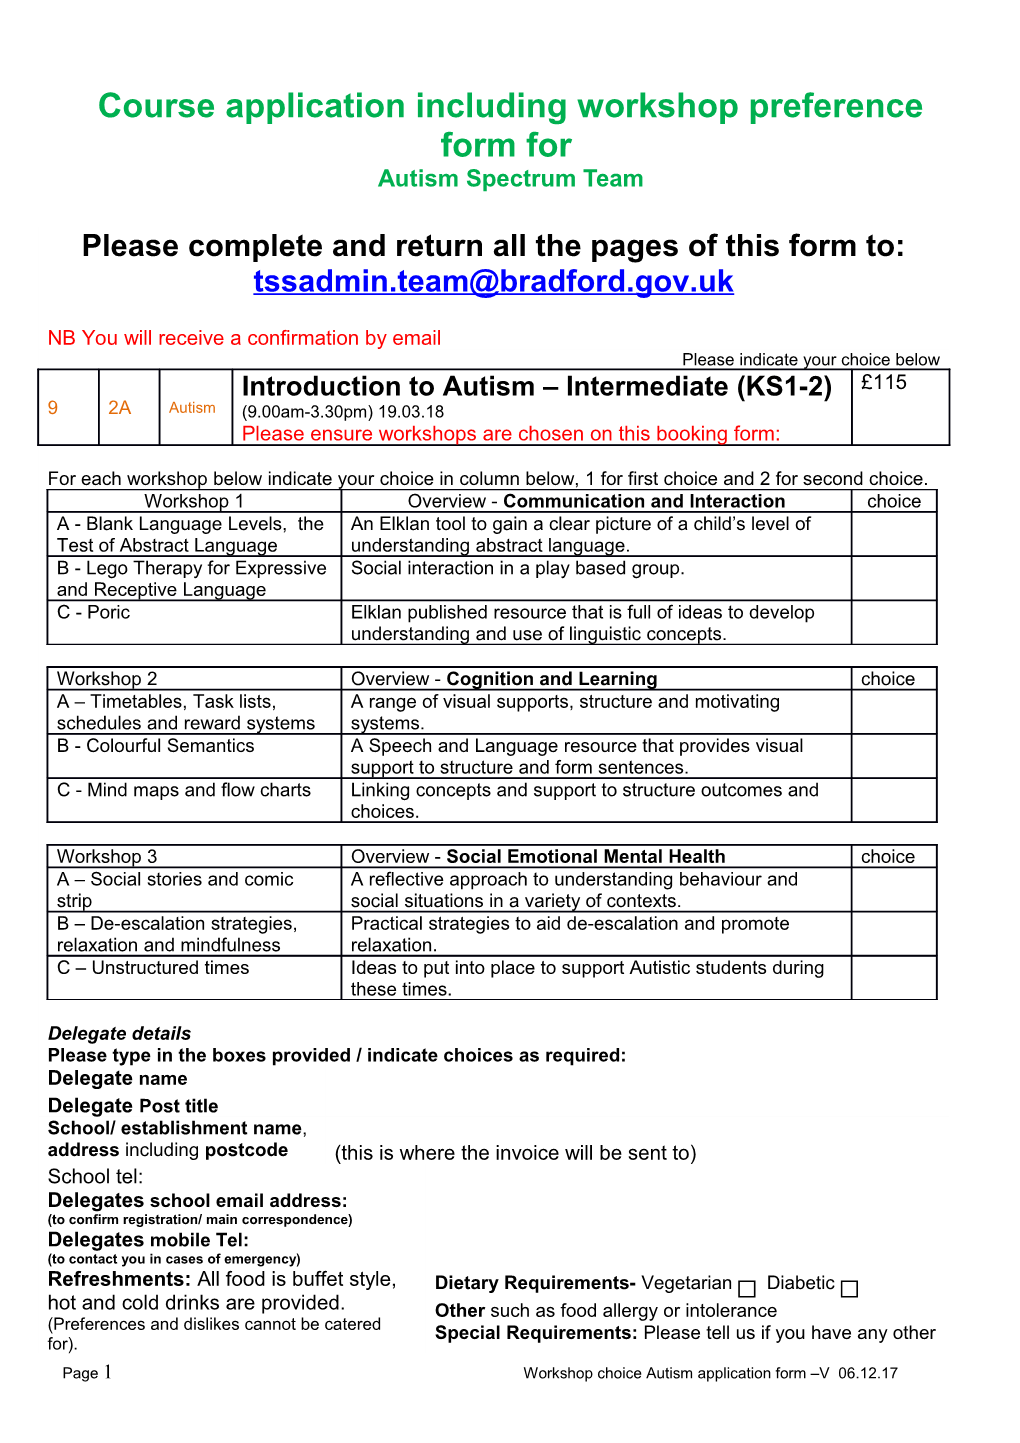 Courseapplication Including Workshop Preference Form For